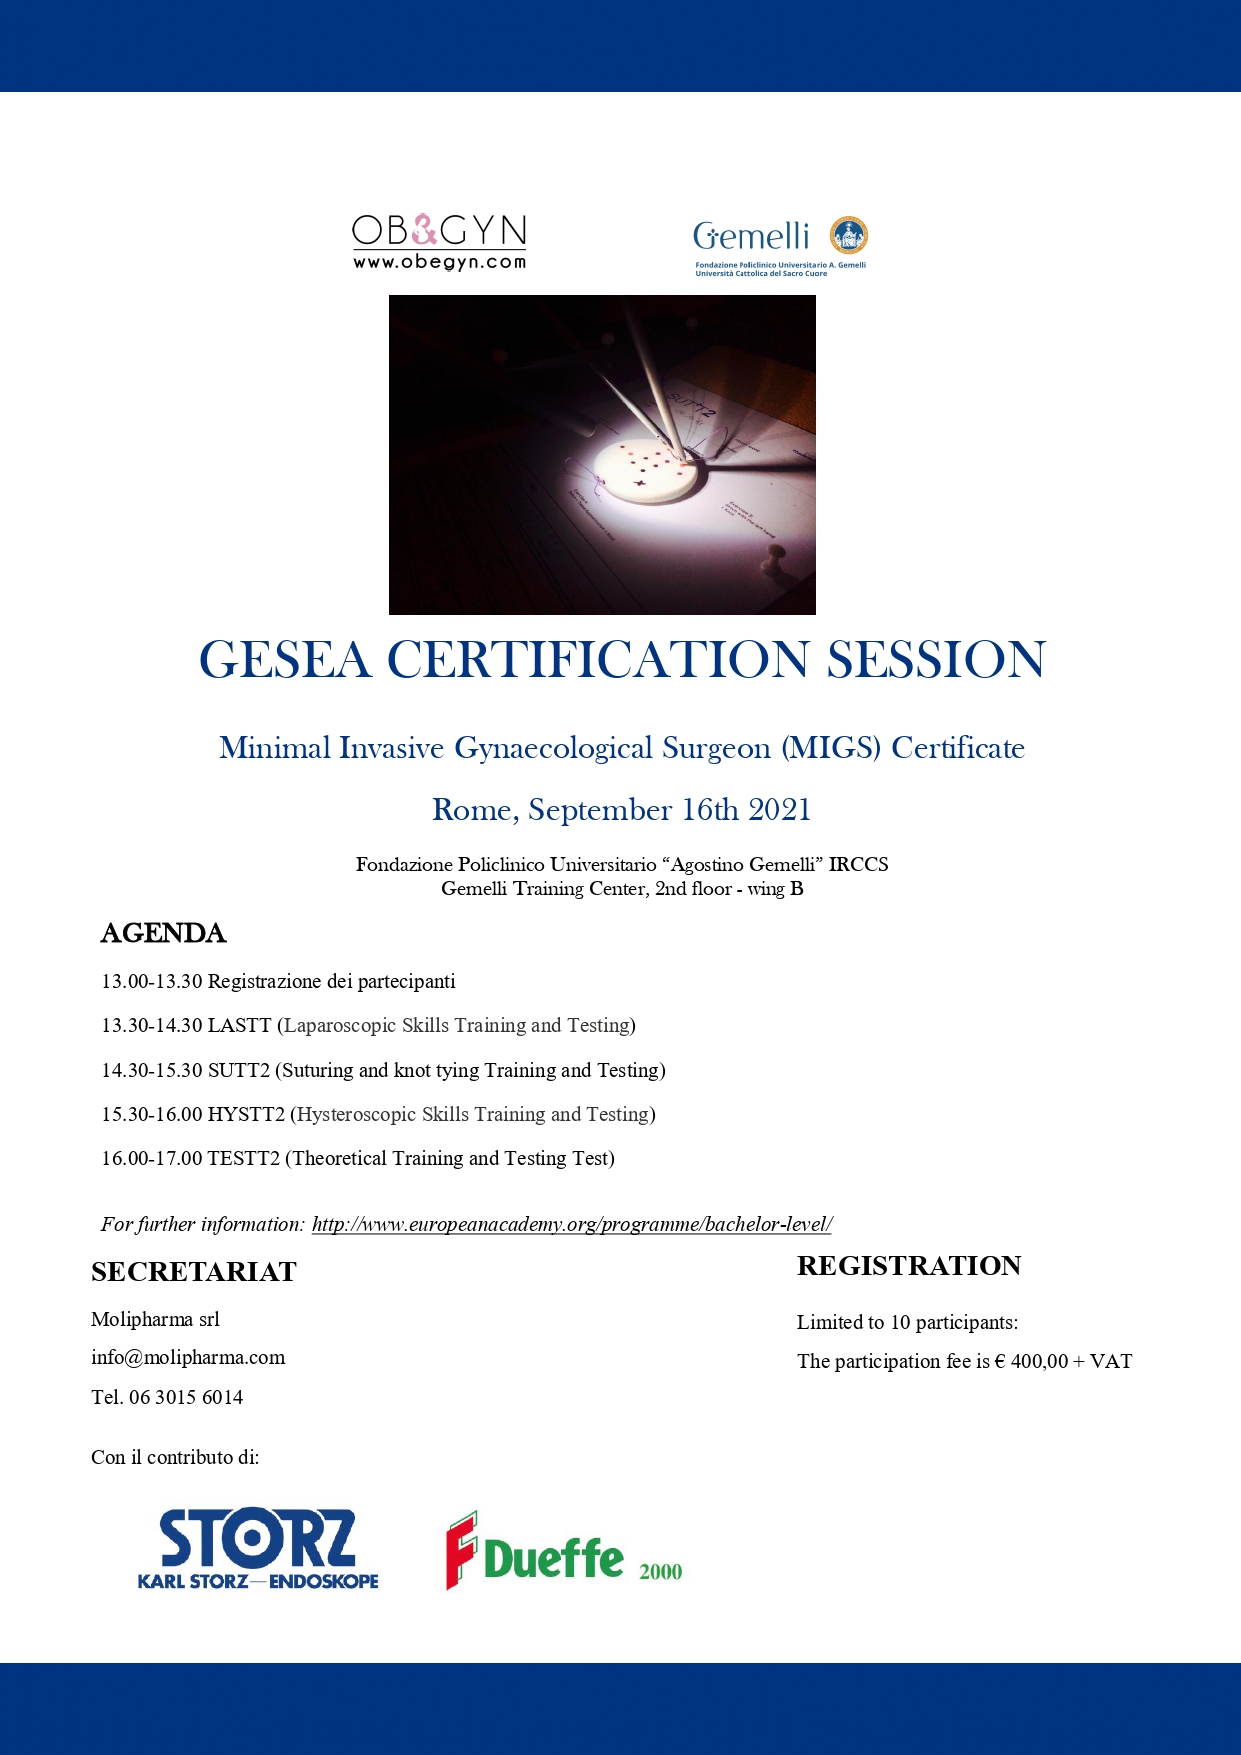 Programma GESEA CERTIFICATION SESSION - Minimal Invasive Gynaecological Surgeon (MIGS) Certificate